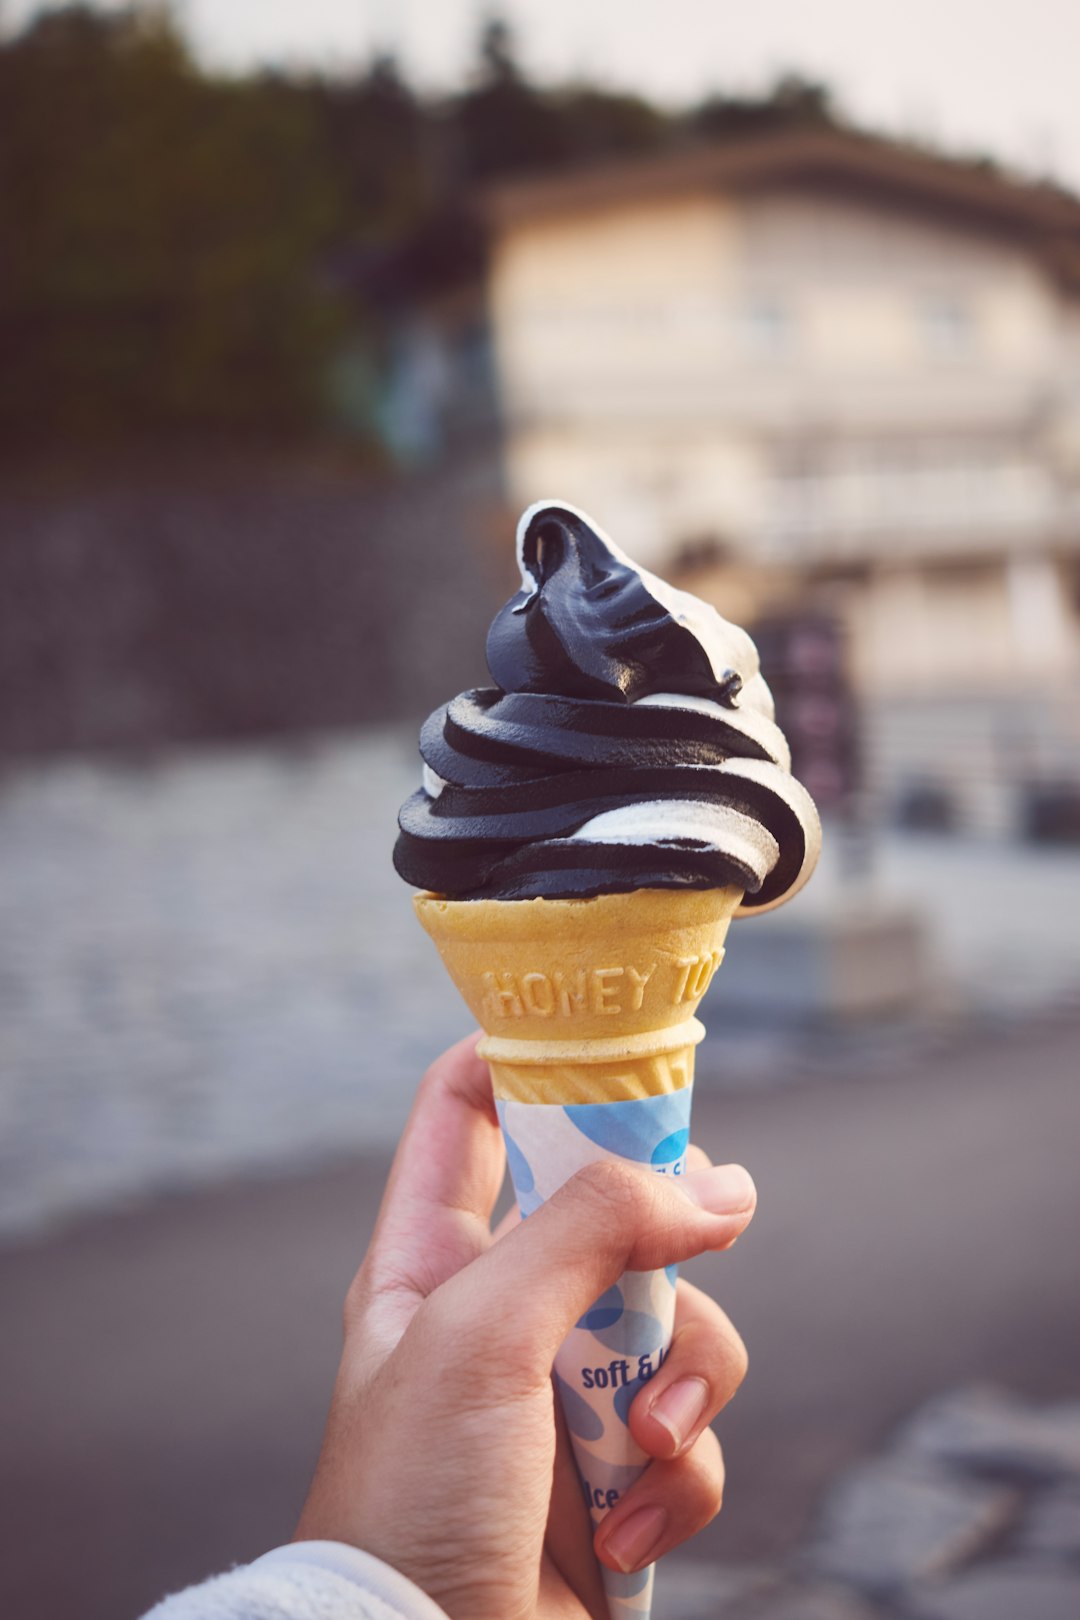 person holding ice cream cone with chocolate and vanilla ice cream